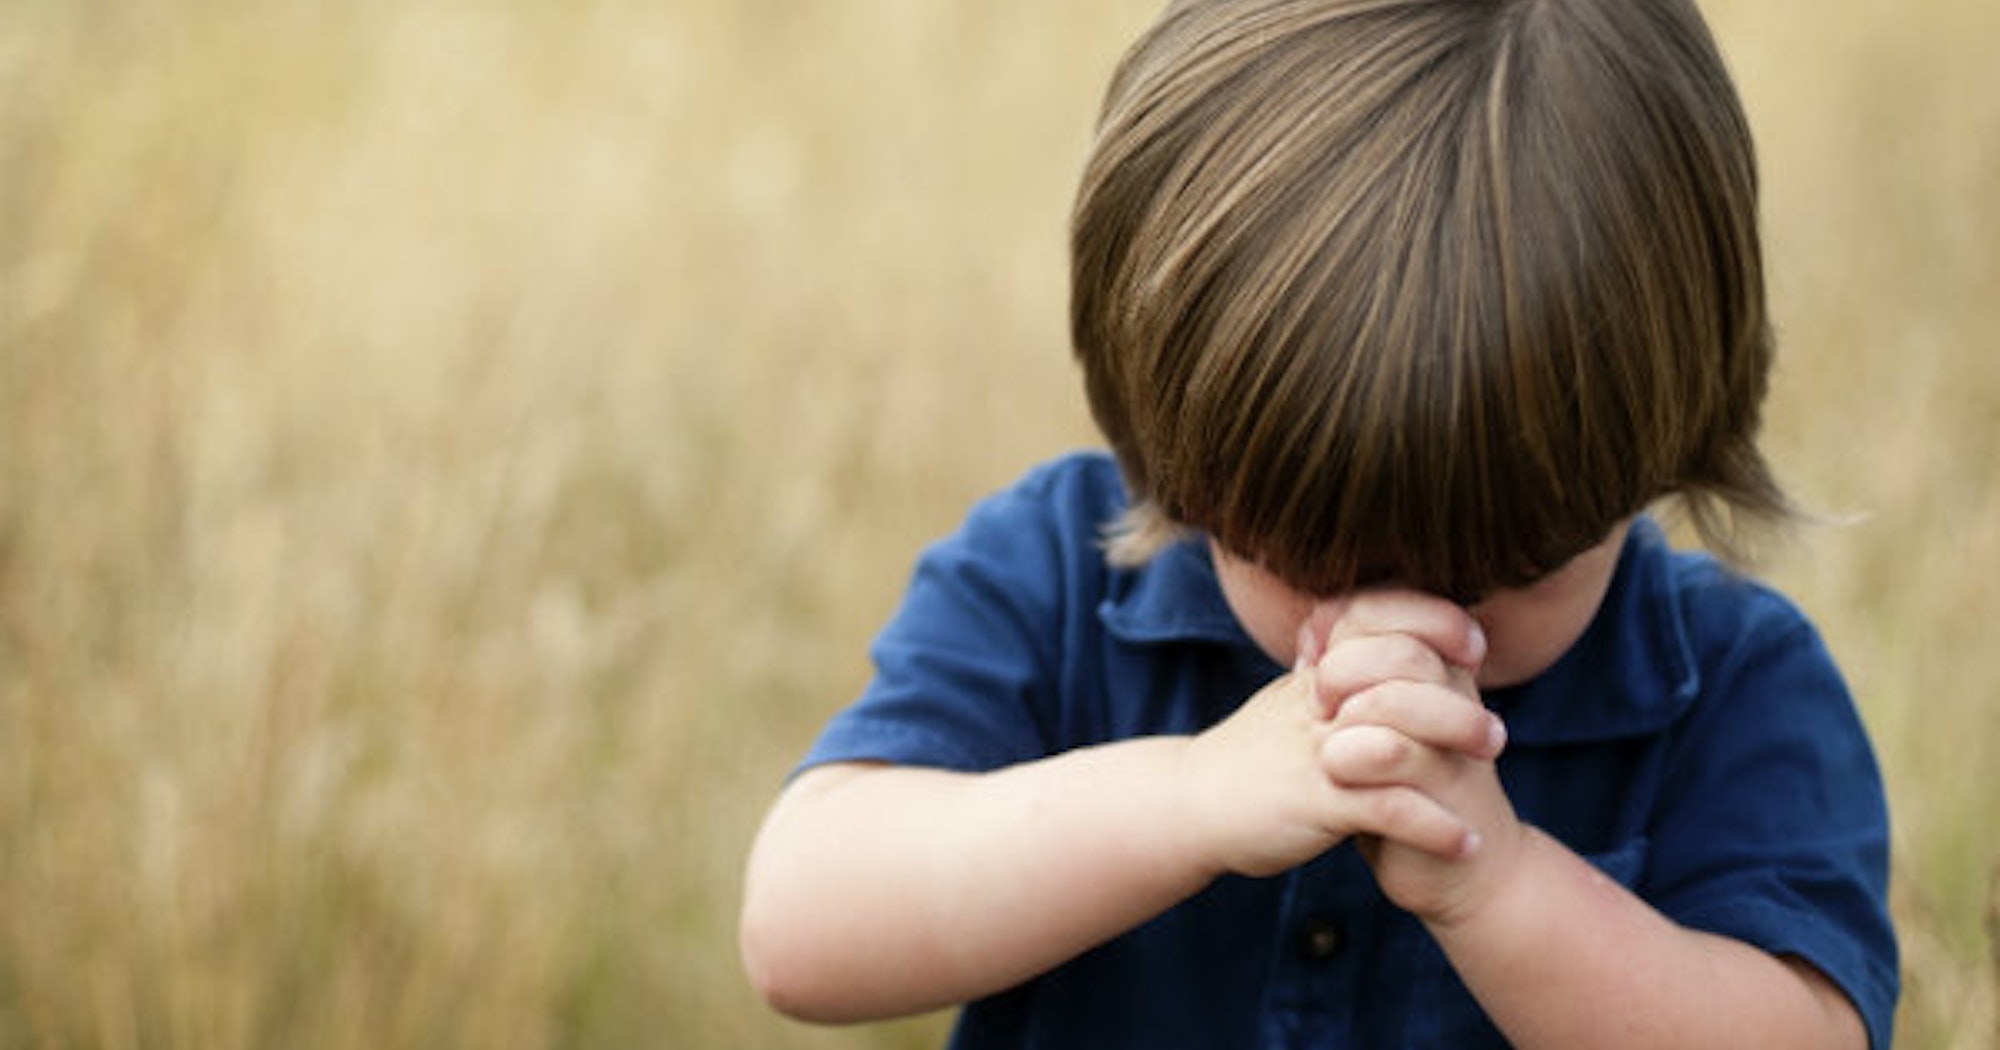 A boy in blue shirt praying